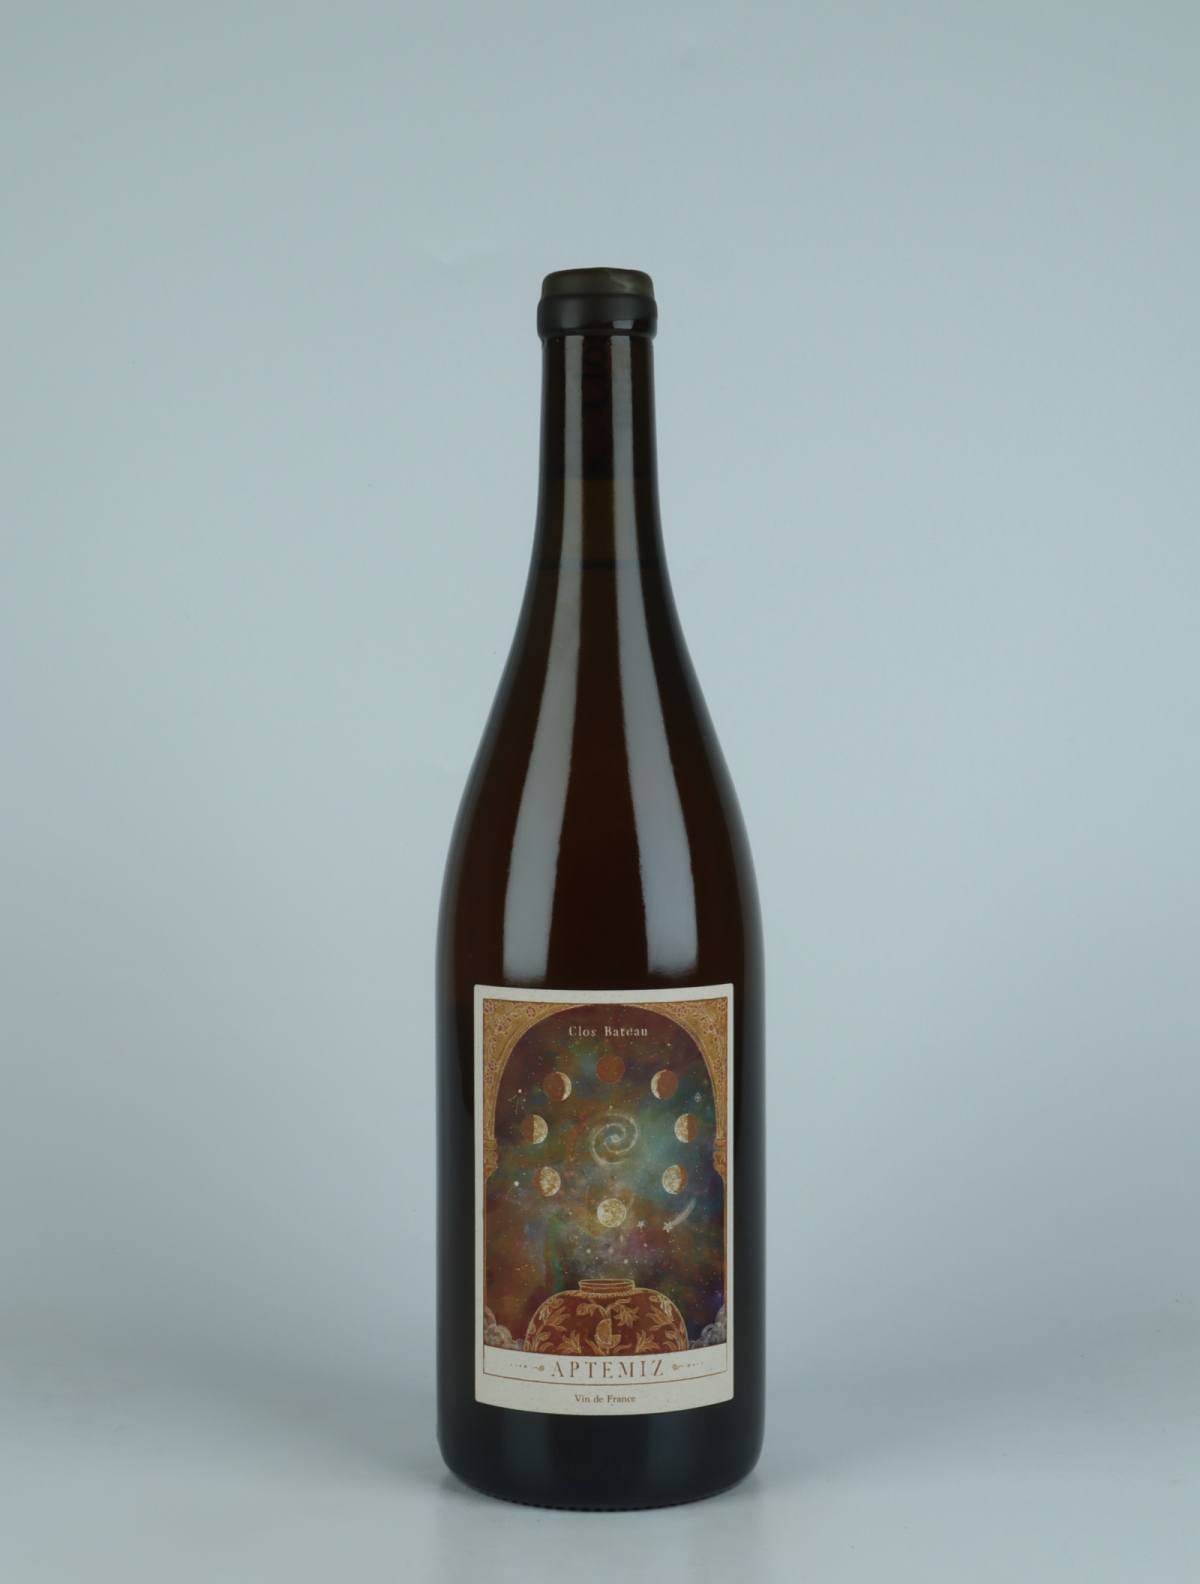 A bottle 2022 Aptemiz Orange wine from Clos Bateau, Beaujolais in France